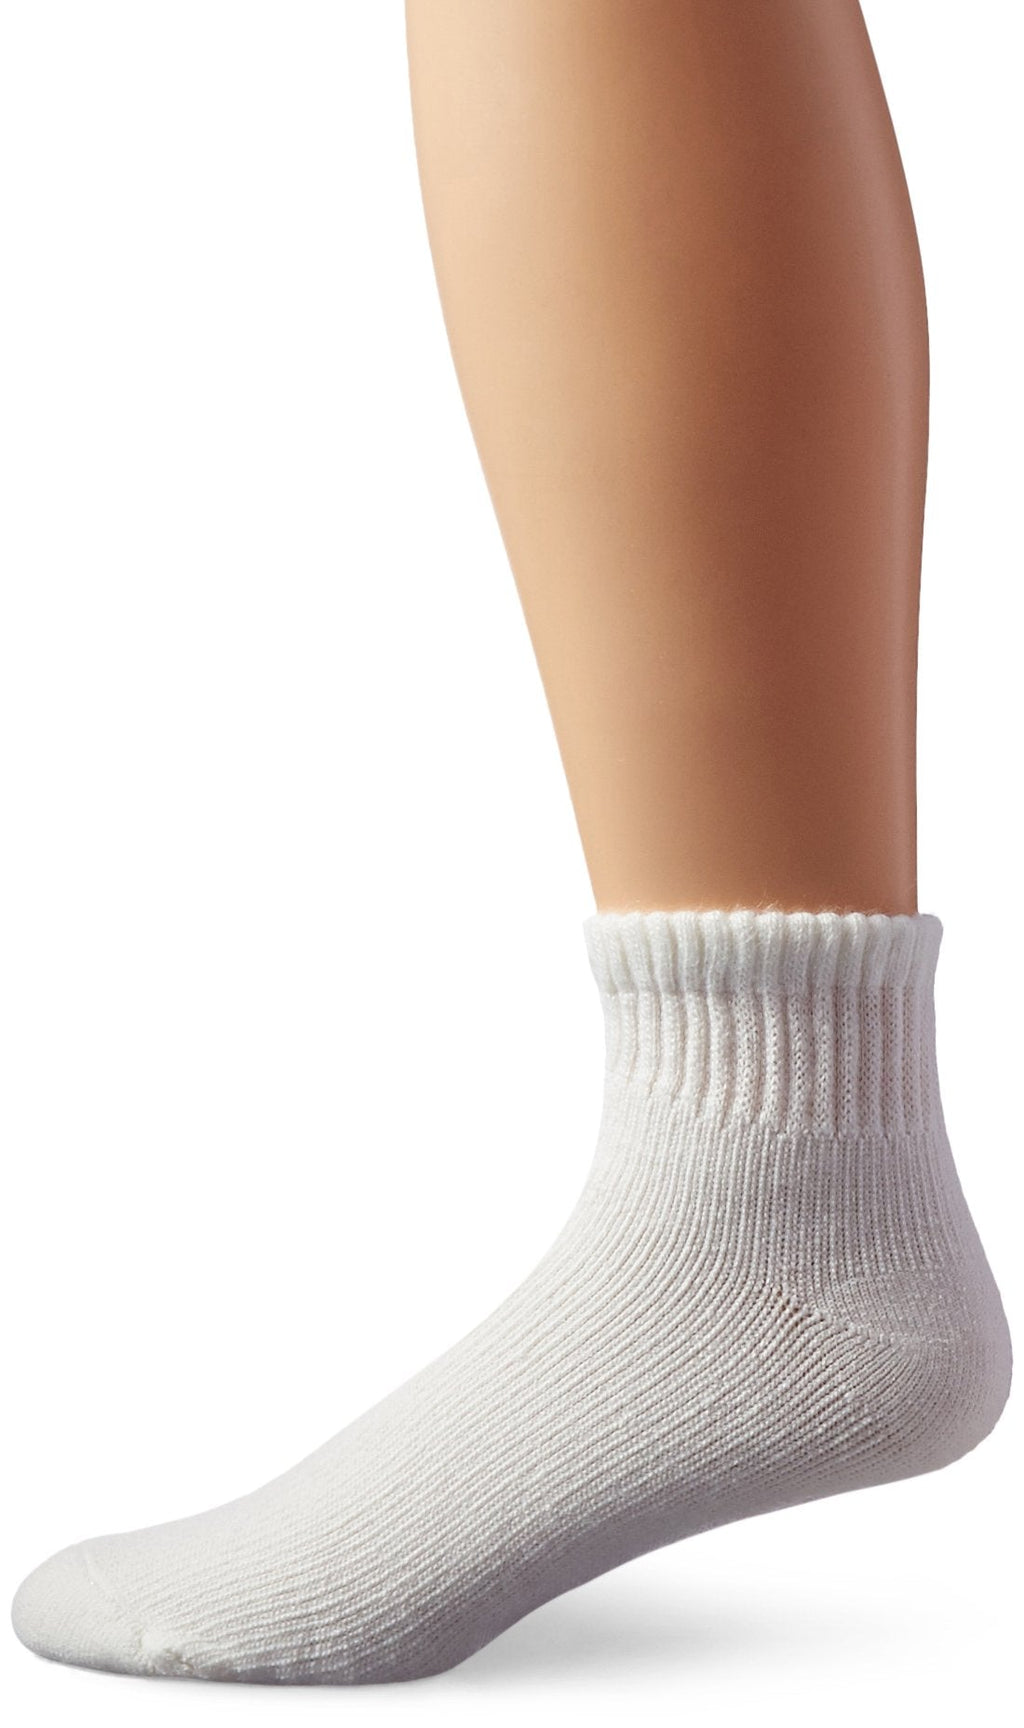 [Australia] - Jobst SensiFoot Diabetic Mini Crew Socks 8 15 mmHg X-Large White 